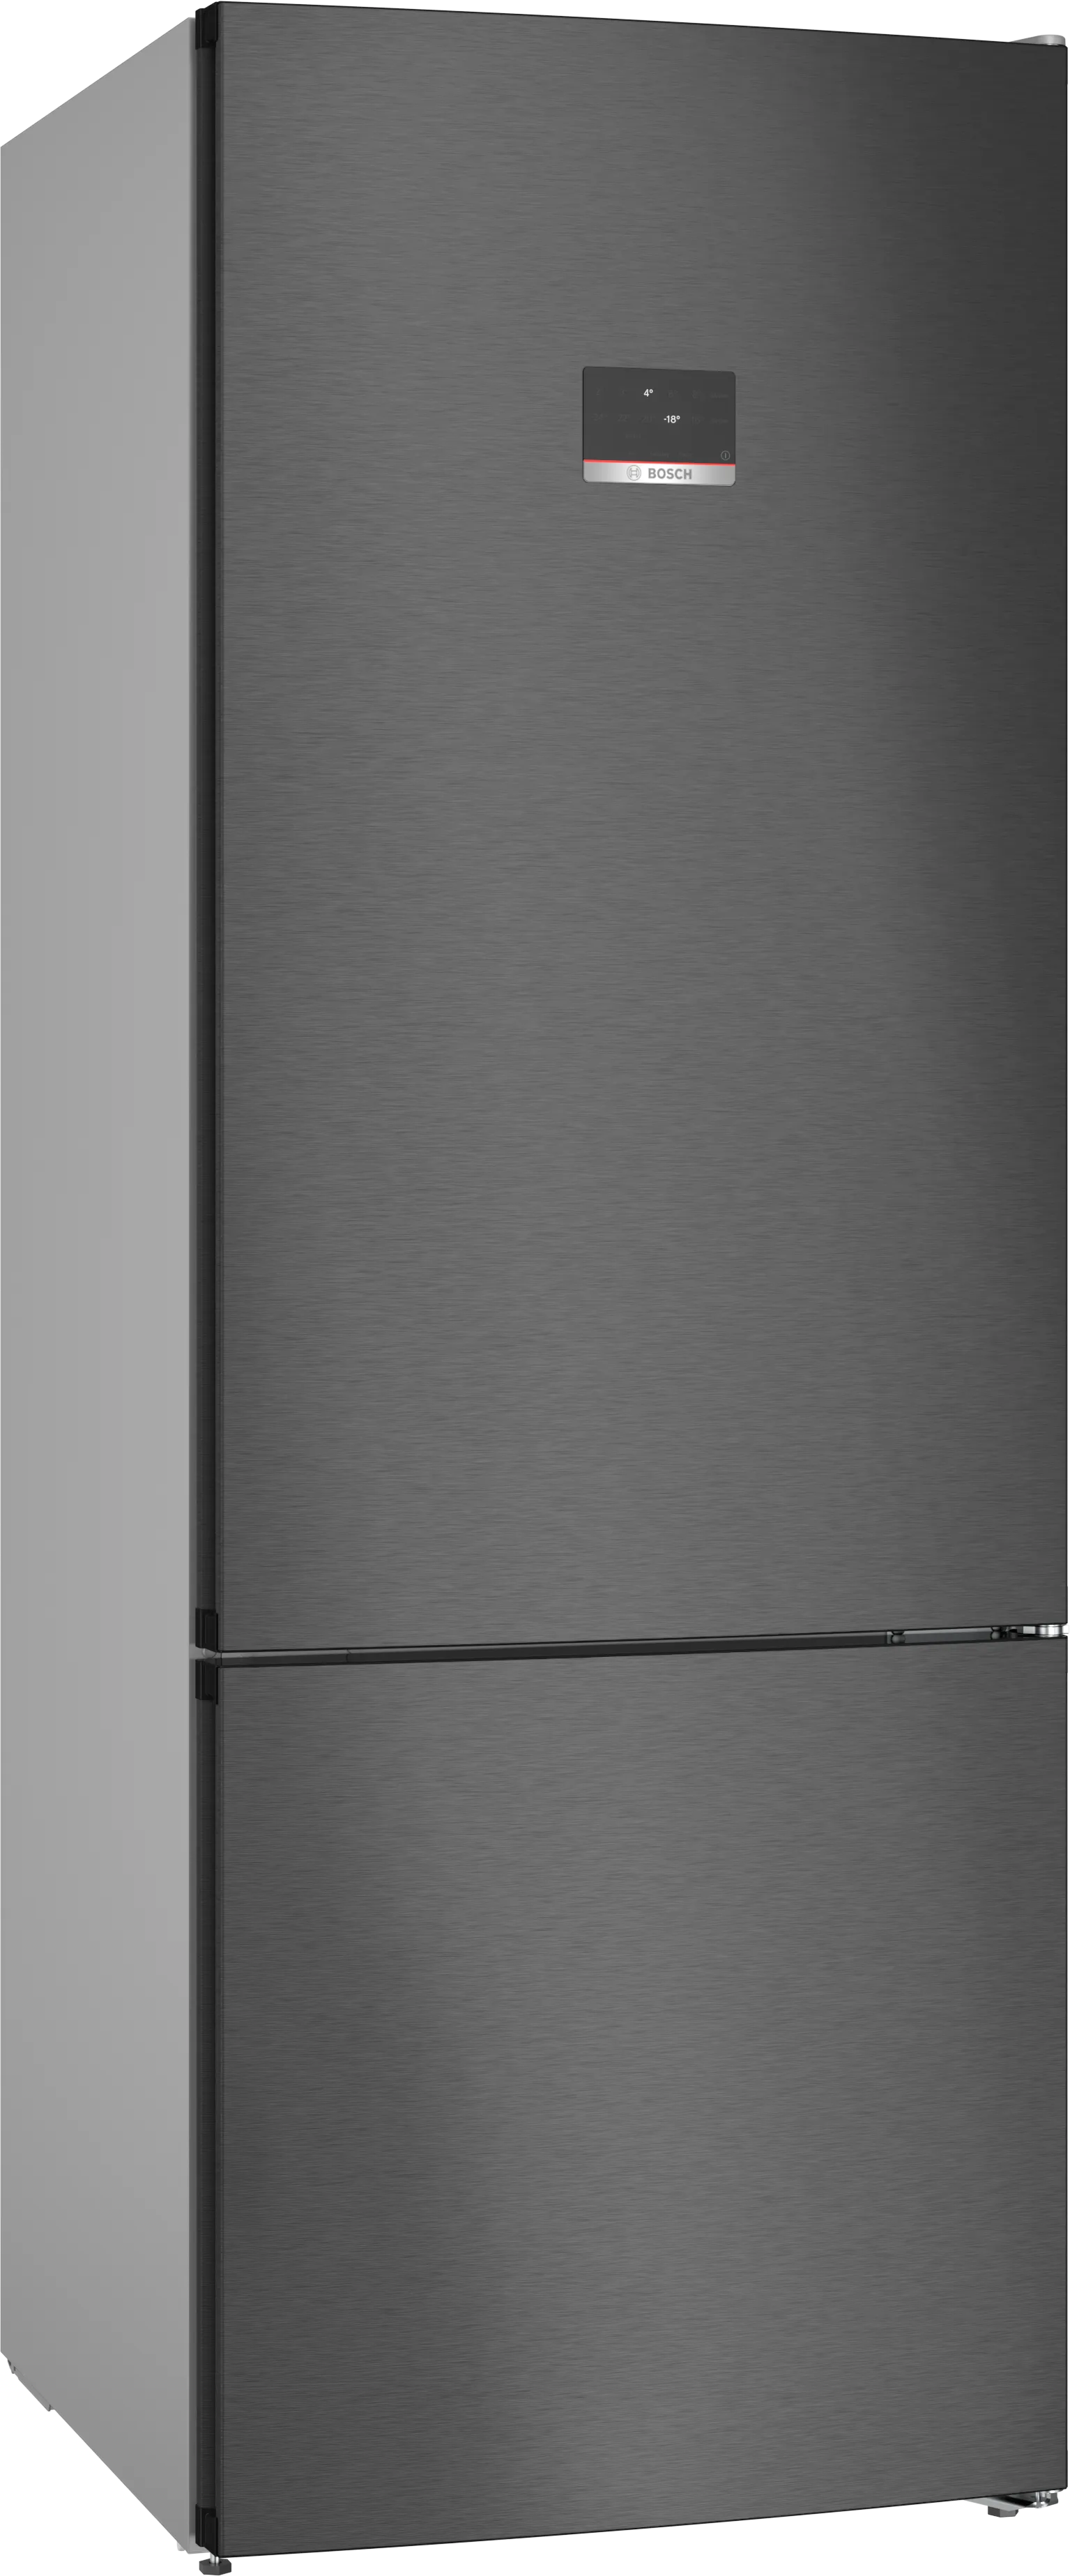 Series 4 free-standing fridge-freezer with freezer at bottom 193 x 70 cm Black stainless steel 